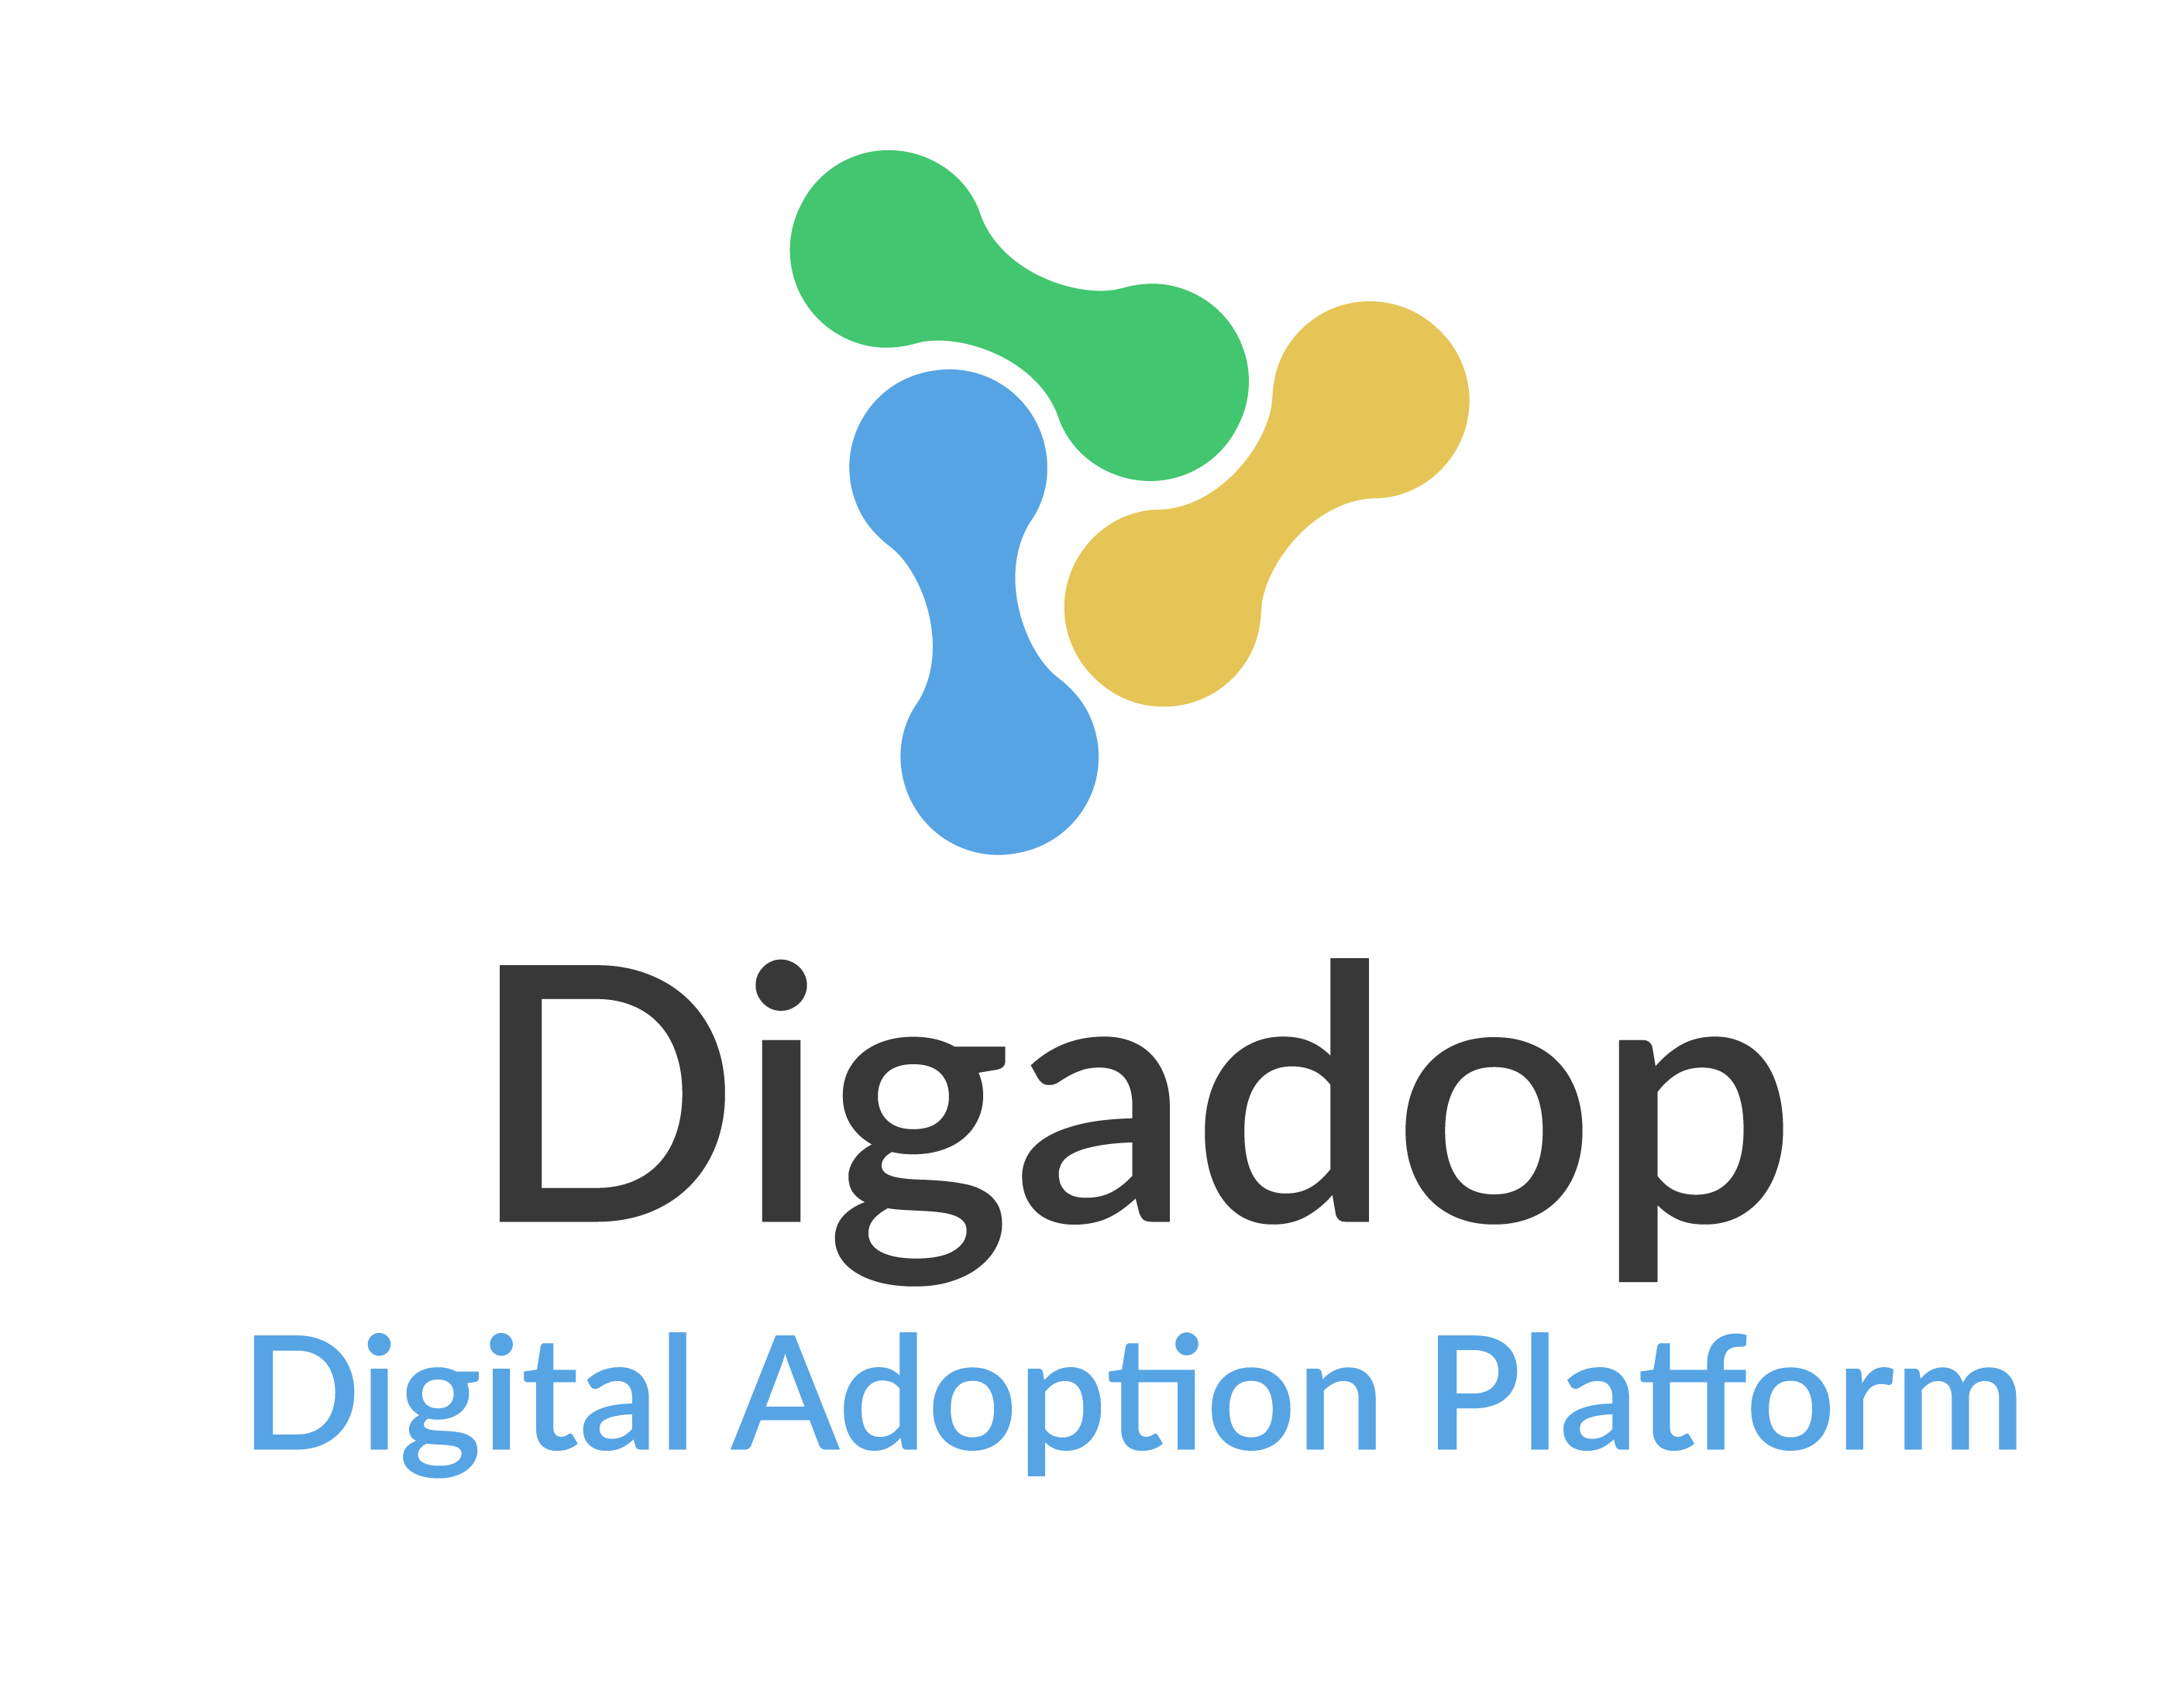 Digadop Digital Adoption Program